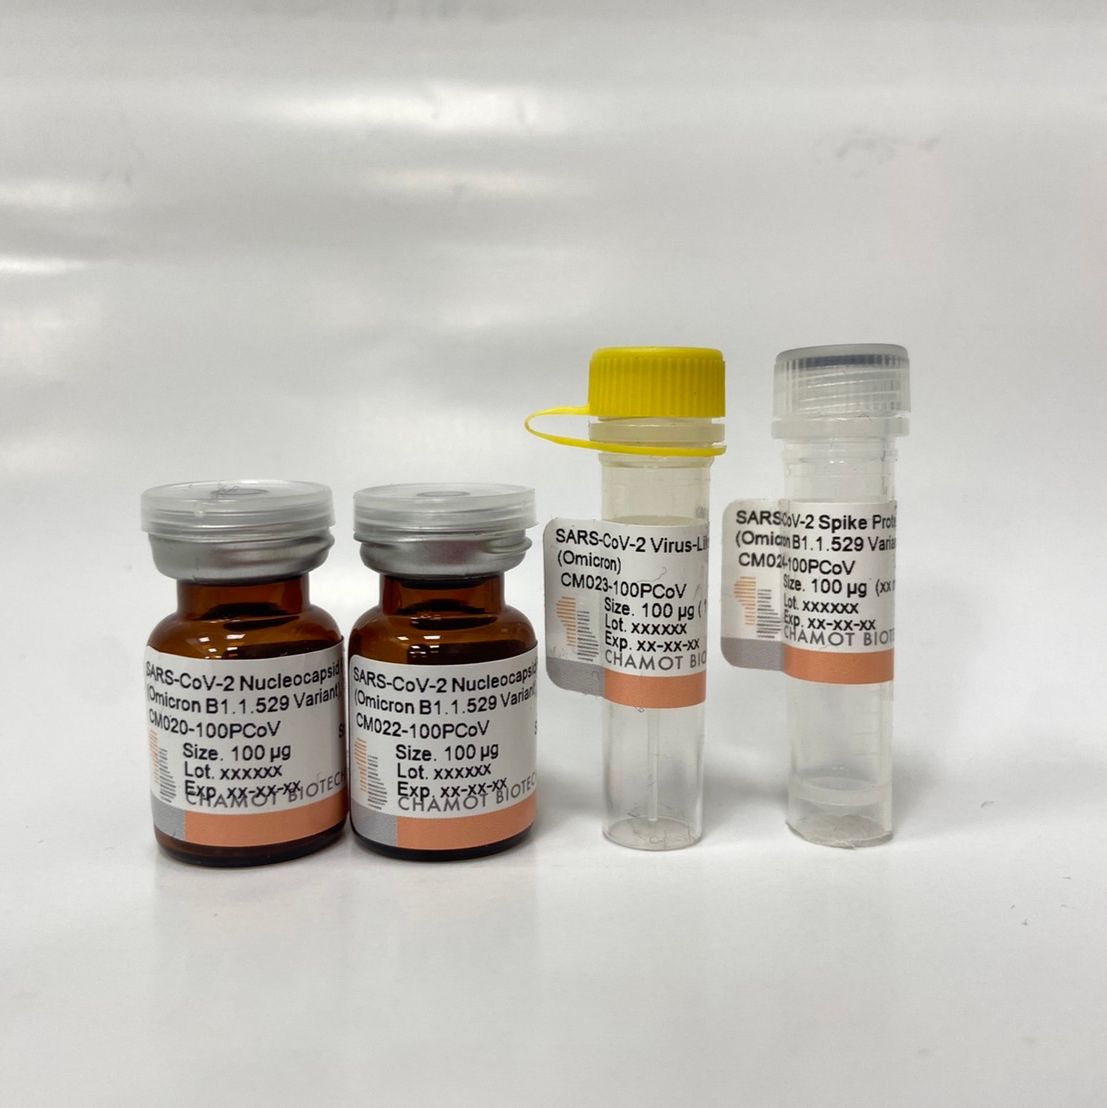 Human anti-SARS-CoV & CoV-2 NP Antibody (IgG), clone 103, Ultra Sensitive